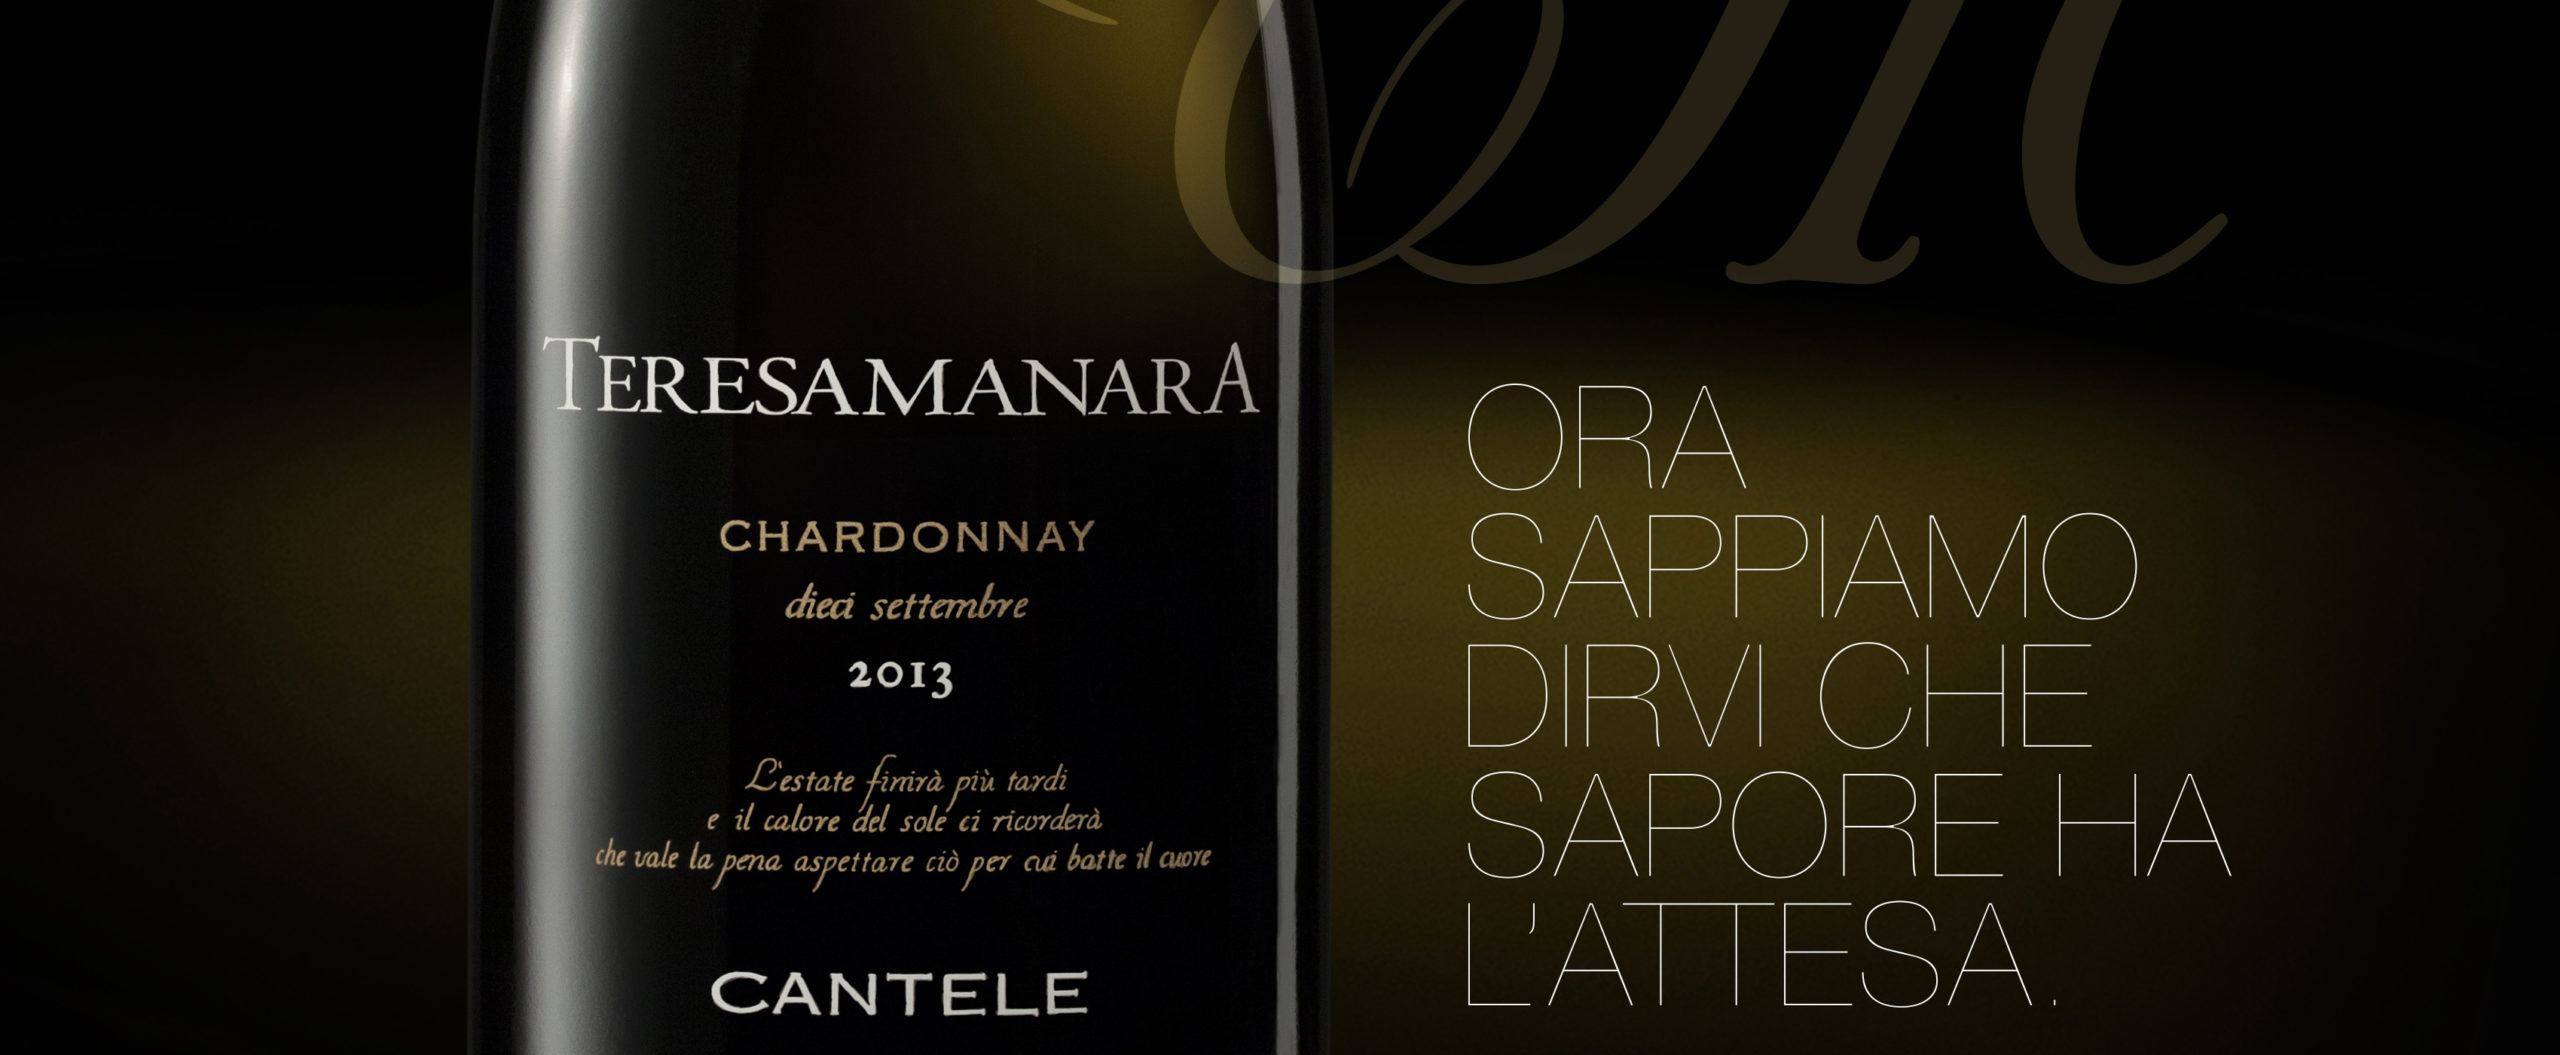 Teresa Manara Chardonnay “Dieci Settembre”